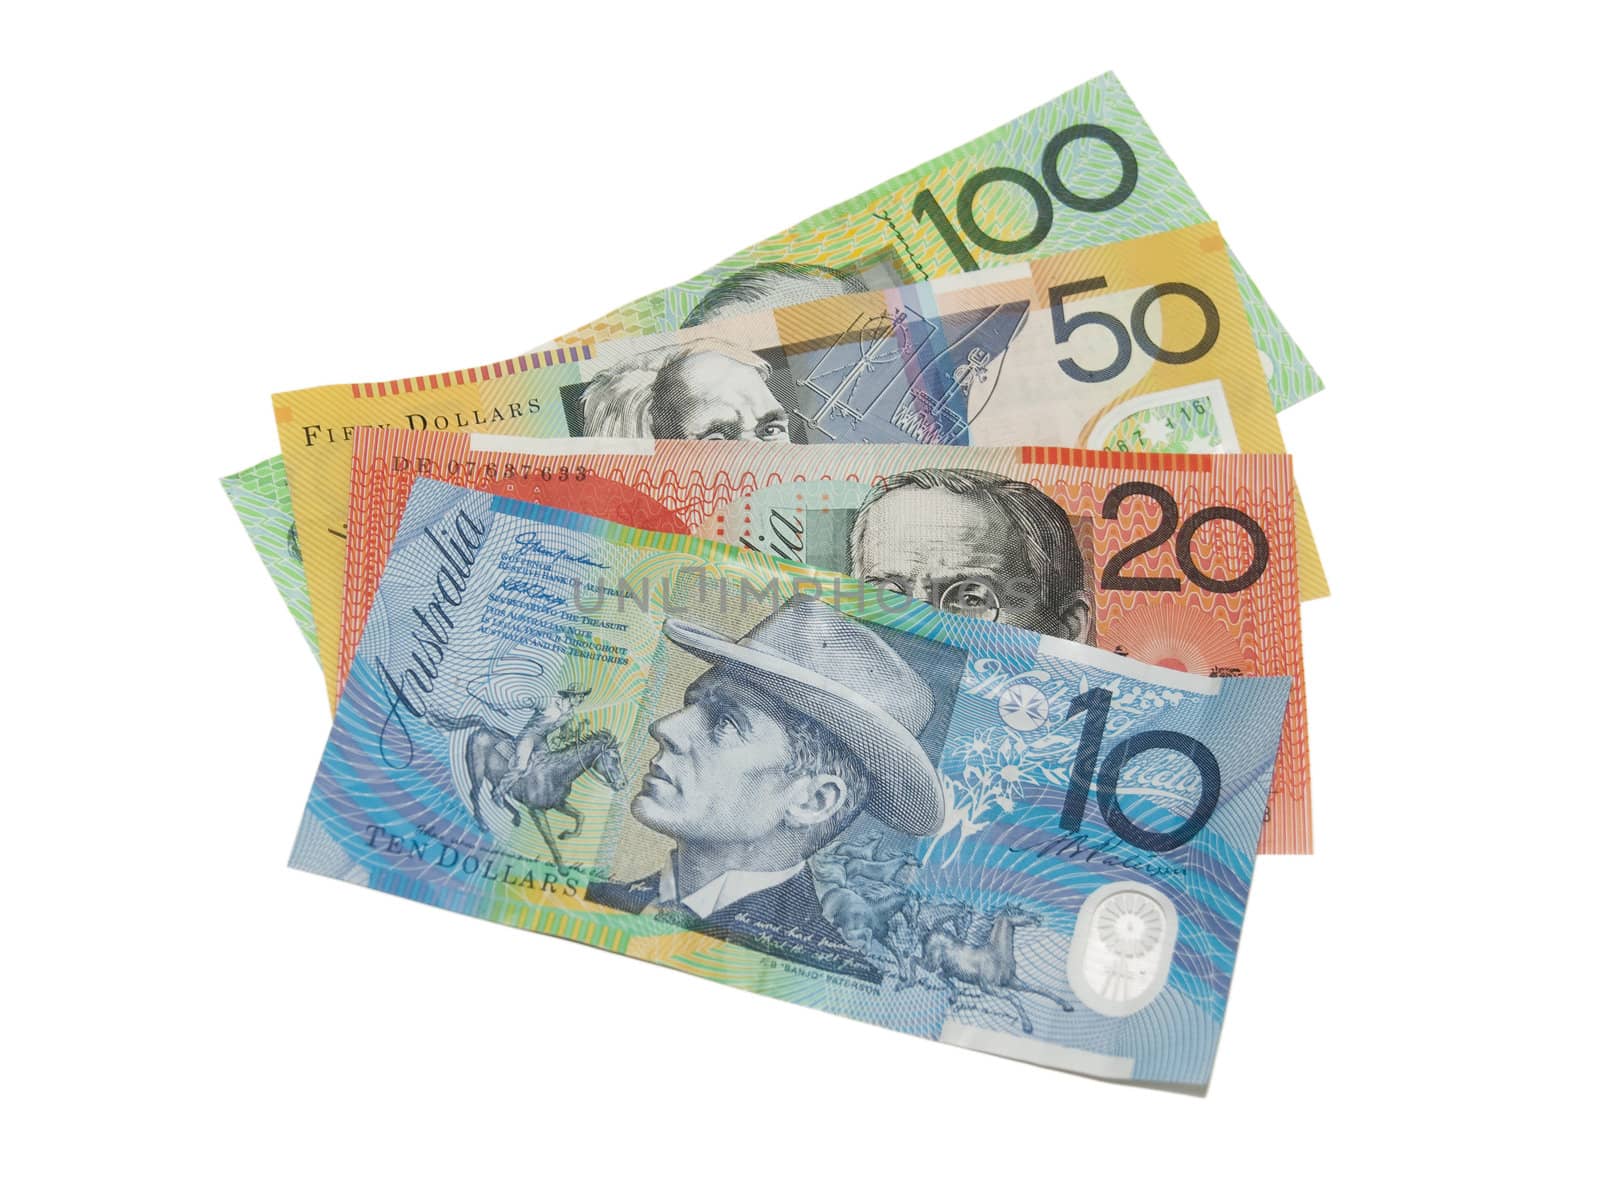 Australian Bank notes isolated on white background by wojciechkozlowski